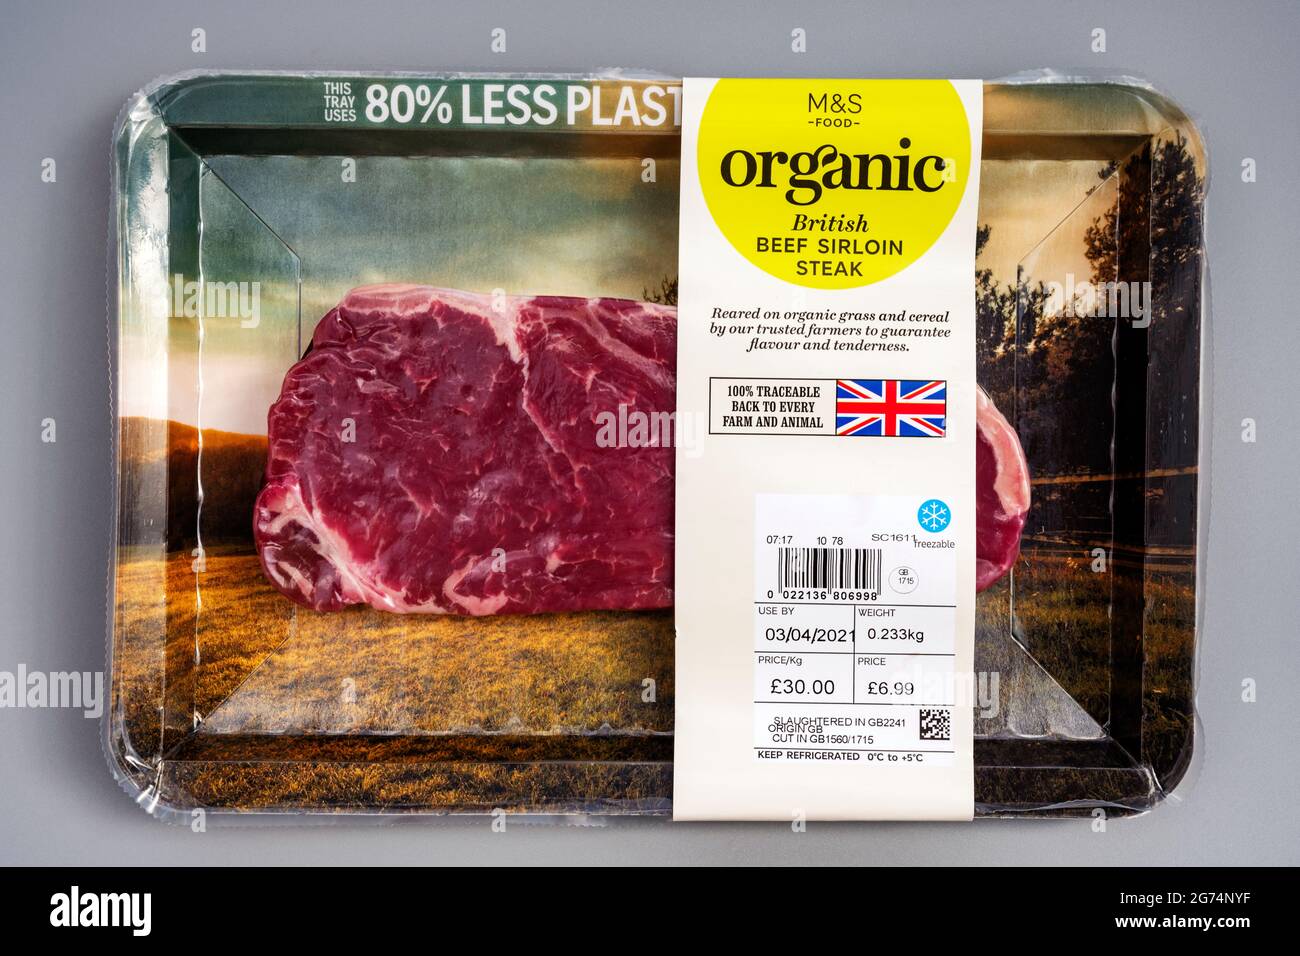 M&S organic British beef sirloin steak Stock Photo